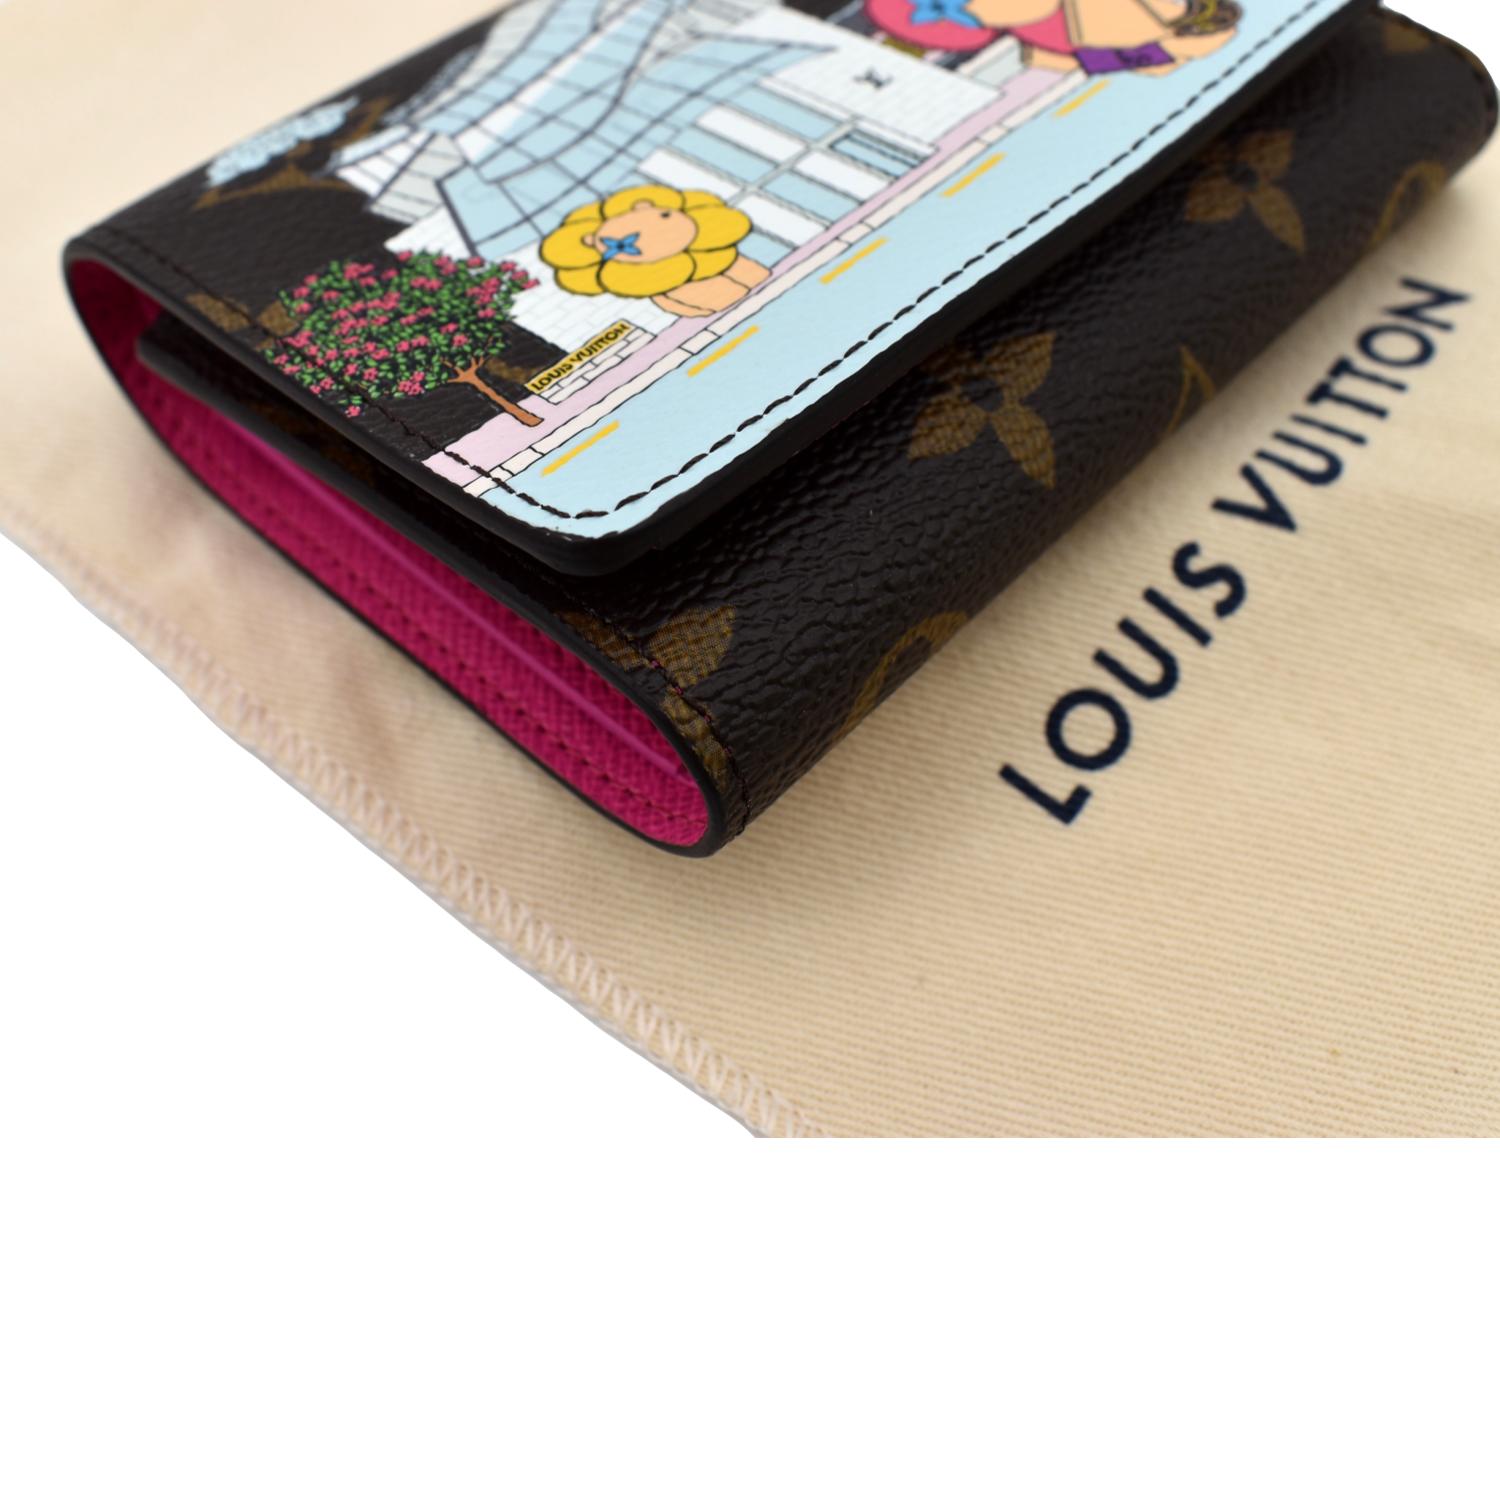 Louis Vuitton Women's Victorine Wallet